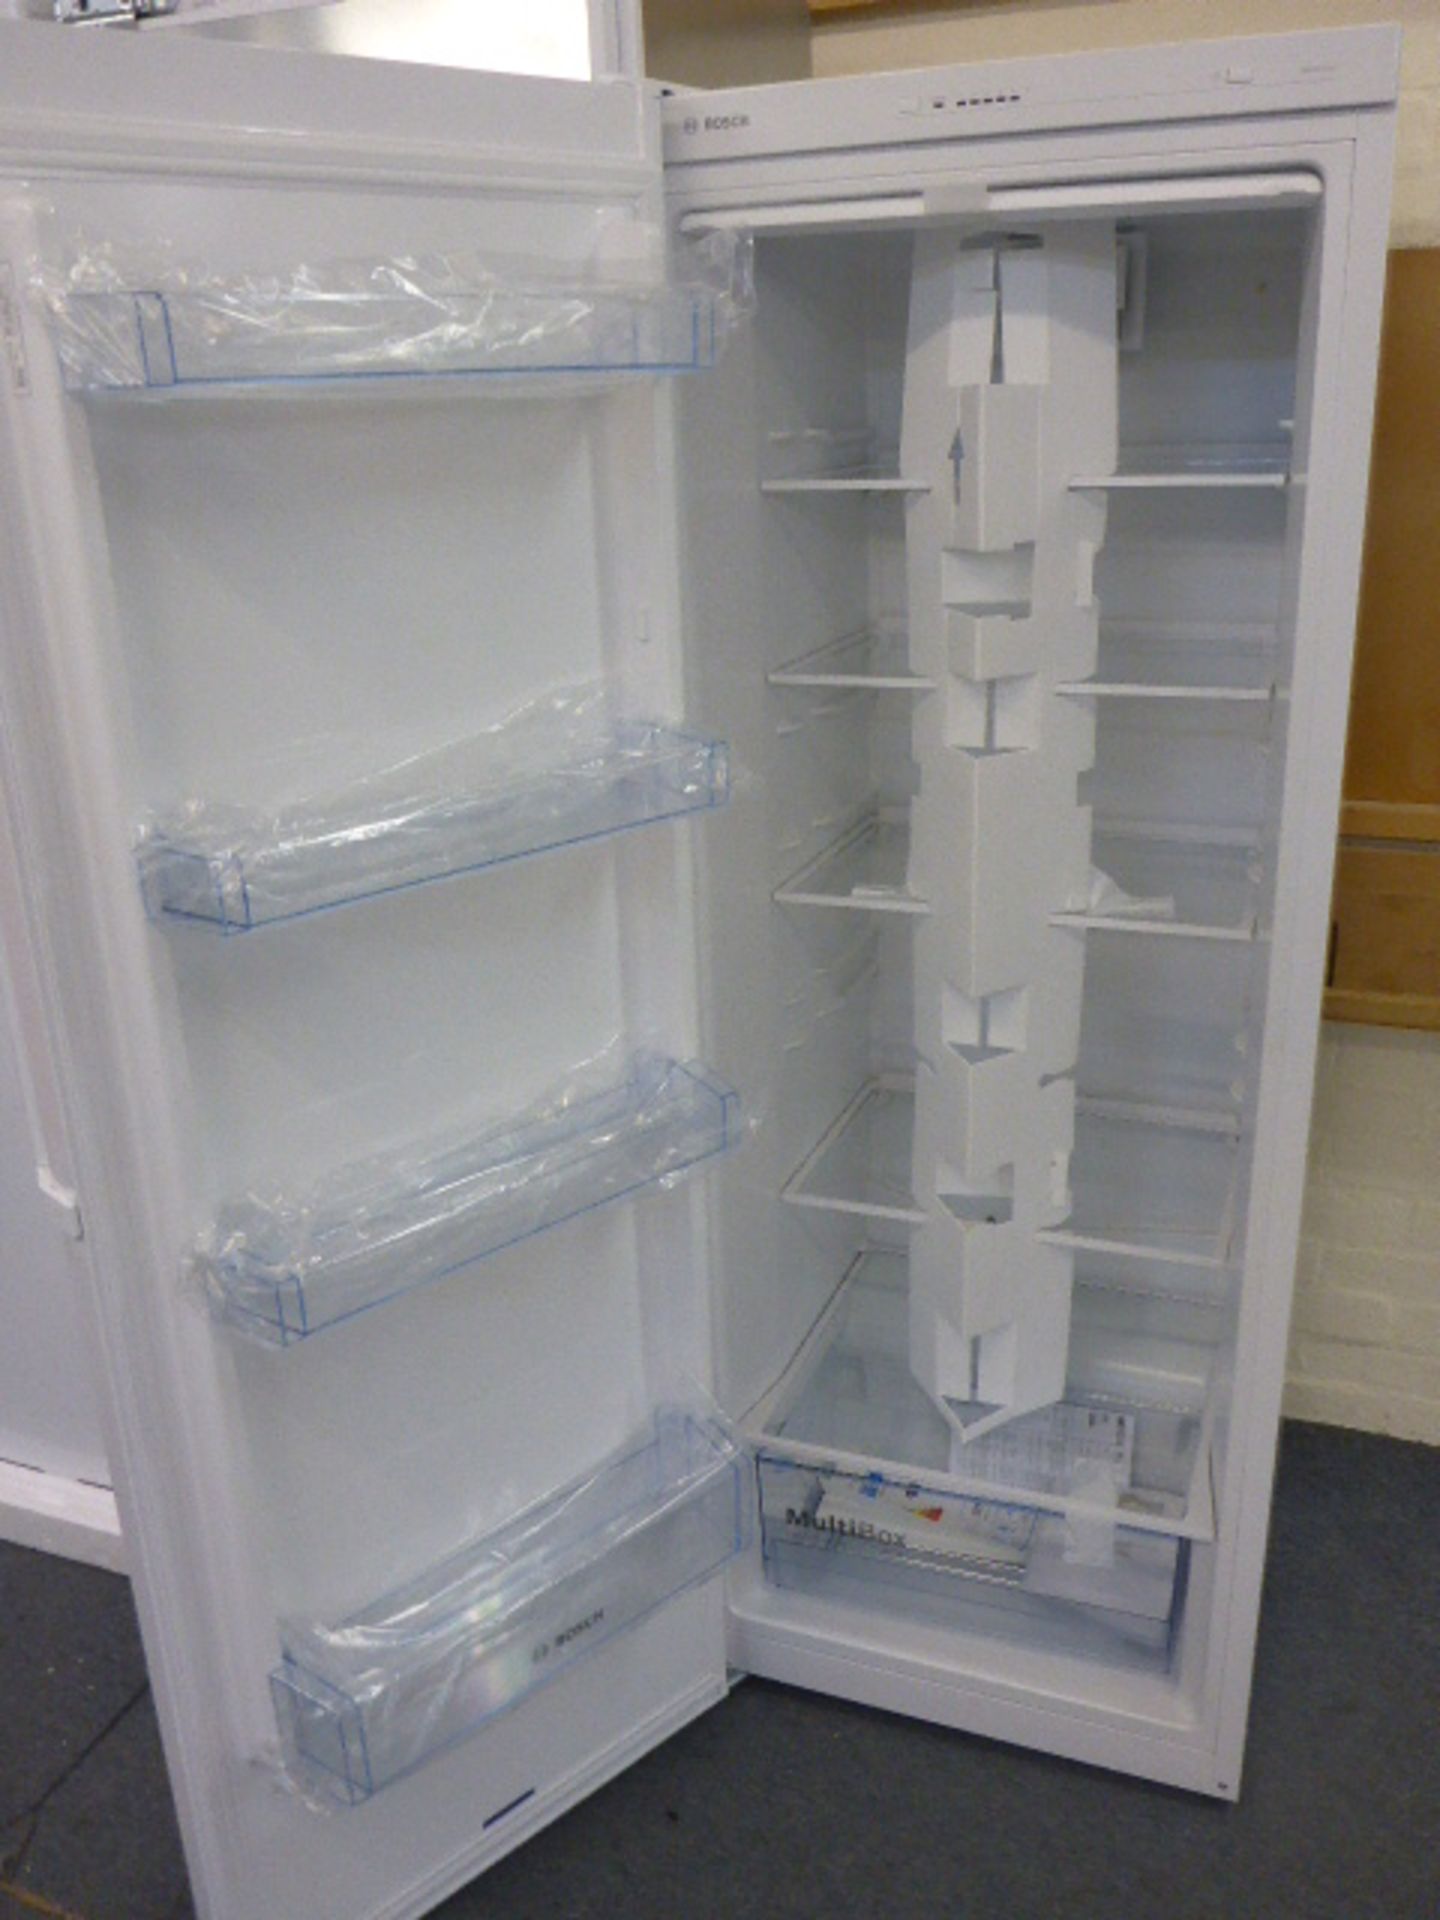 KSV29NW3PGB Bosch Free-standing refrigerator - Image 2 of 2